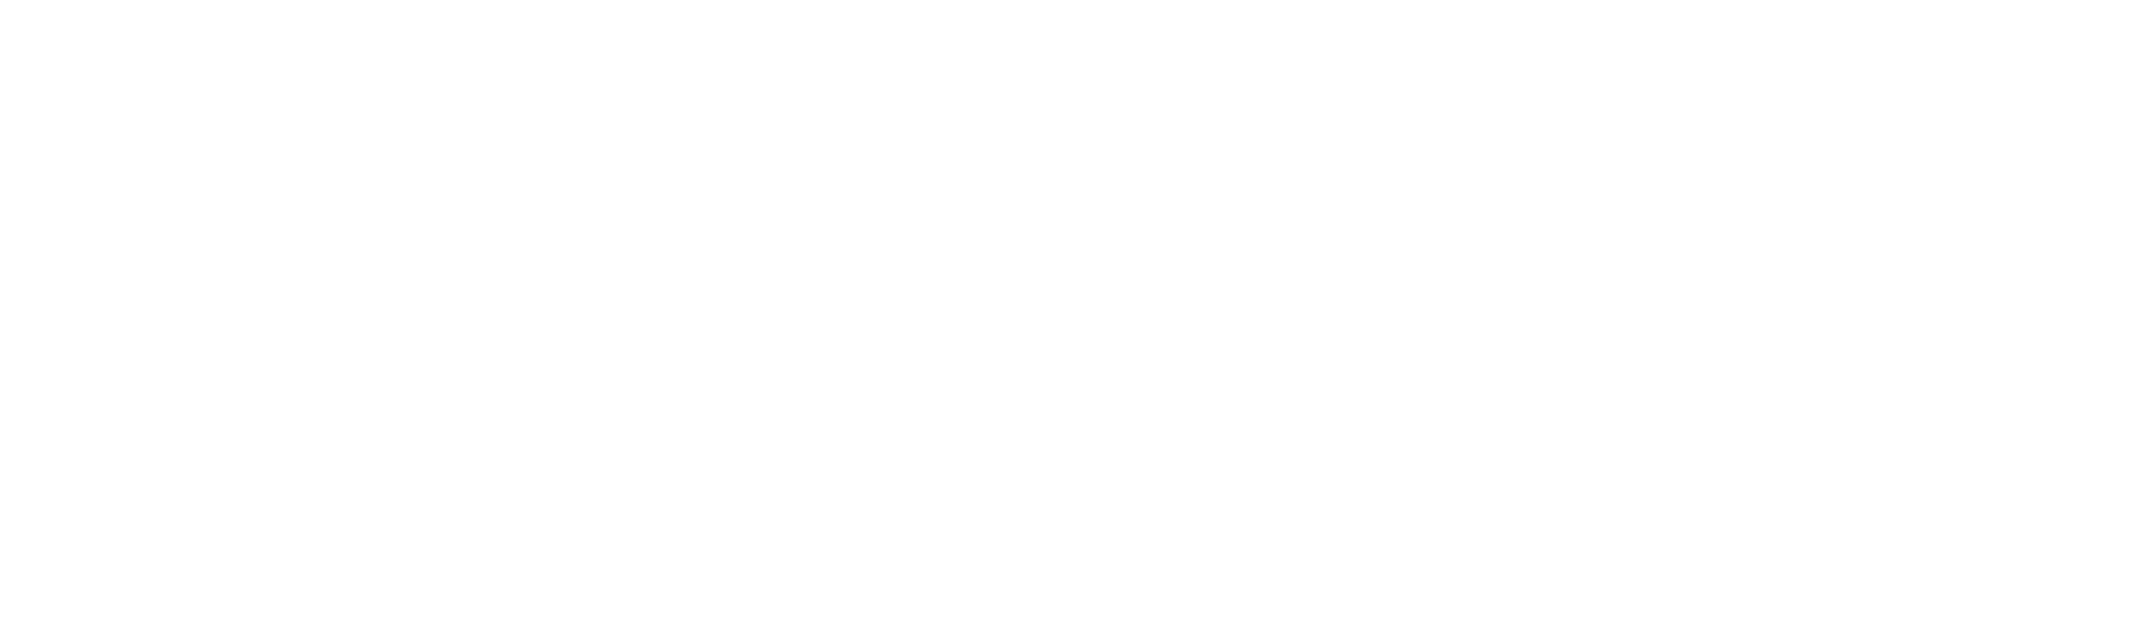 Secure Octane logo